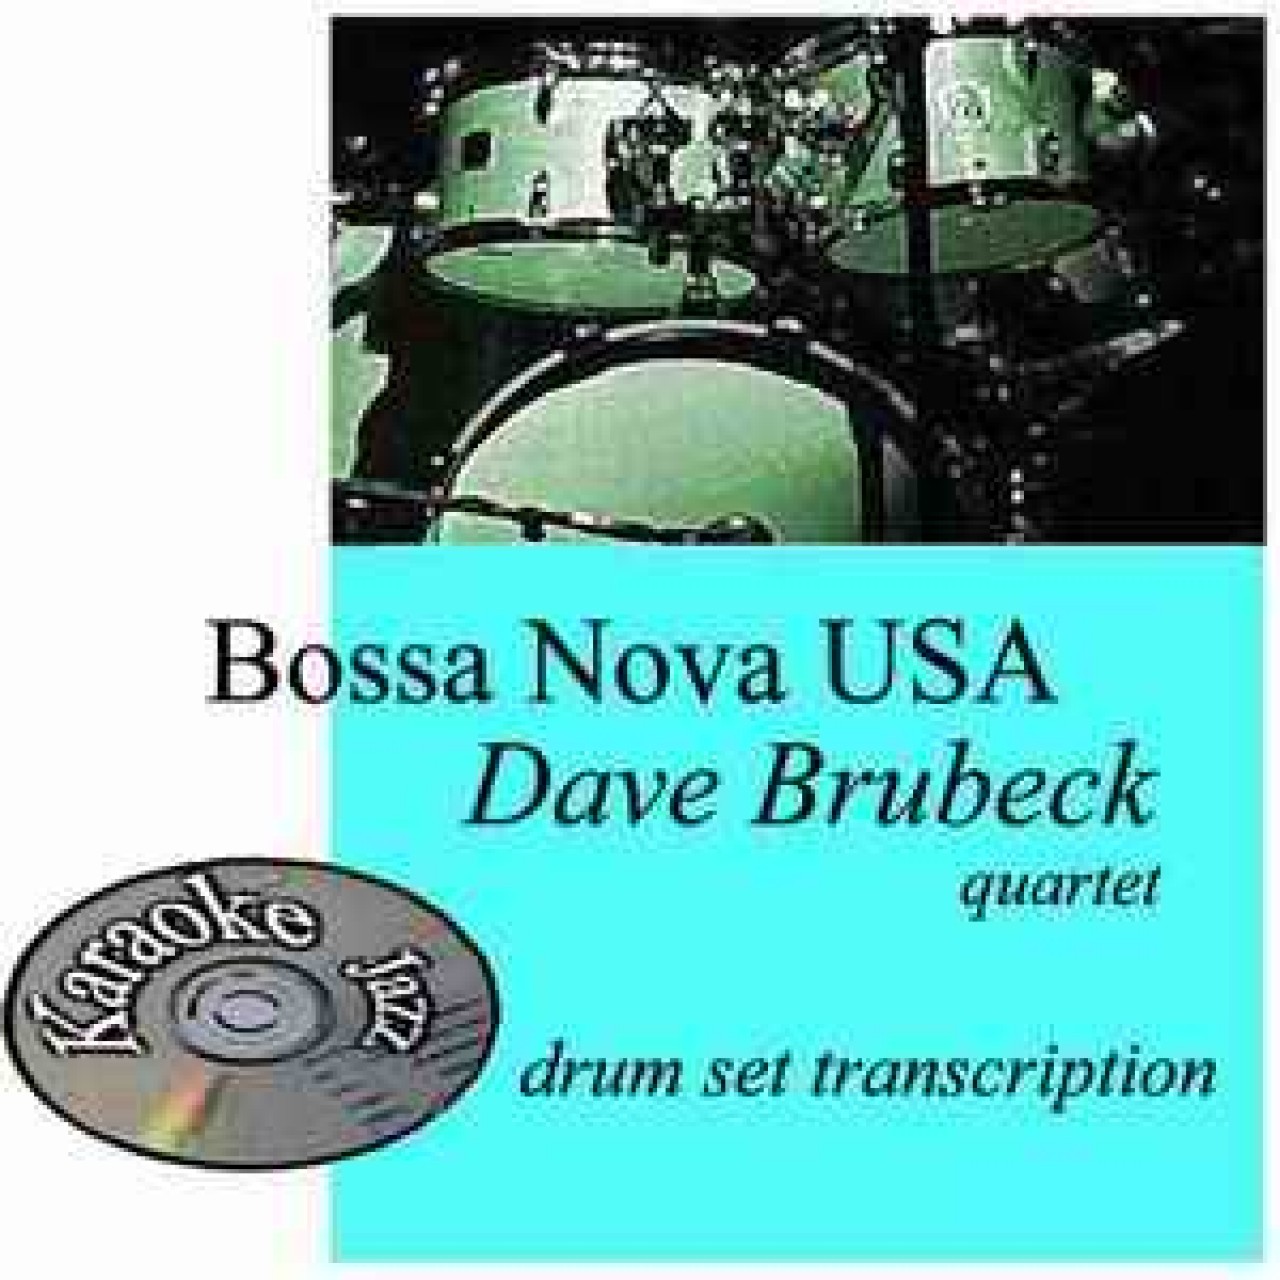 Bossa Nova USA drums